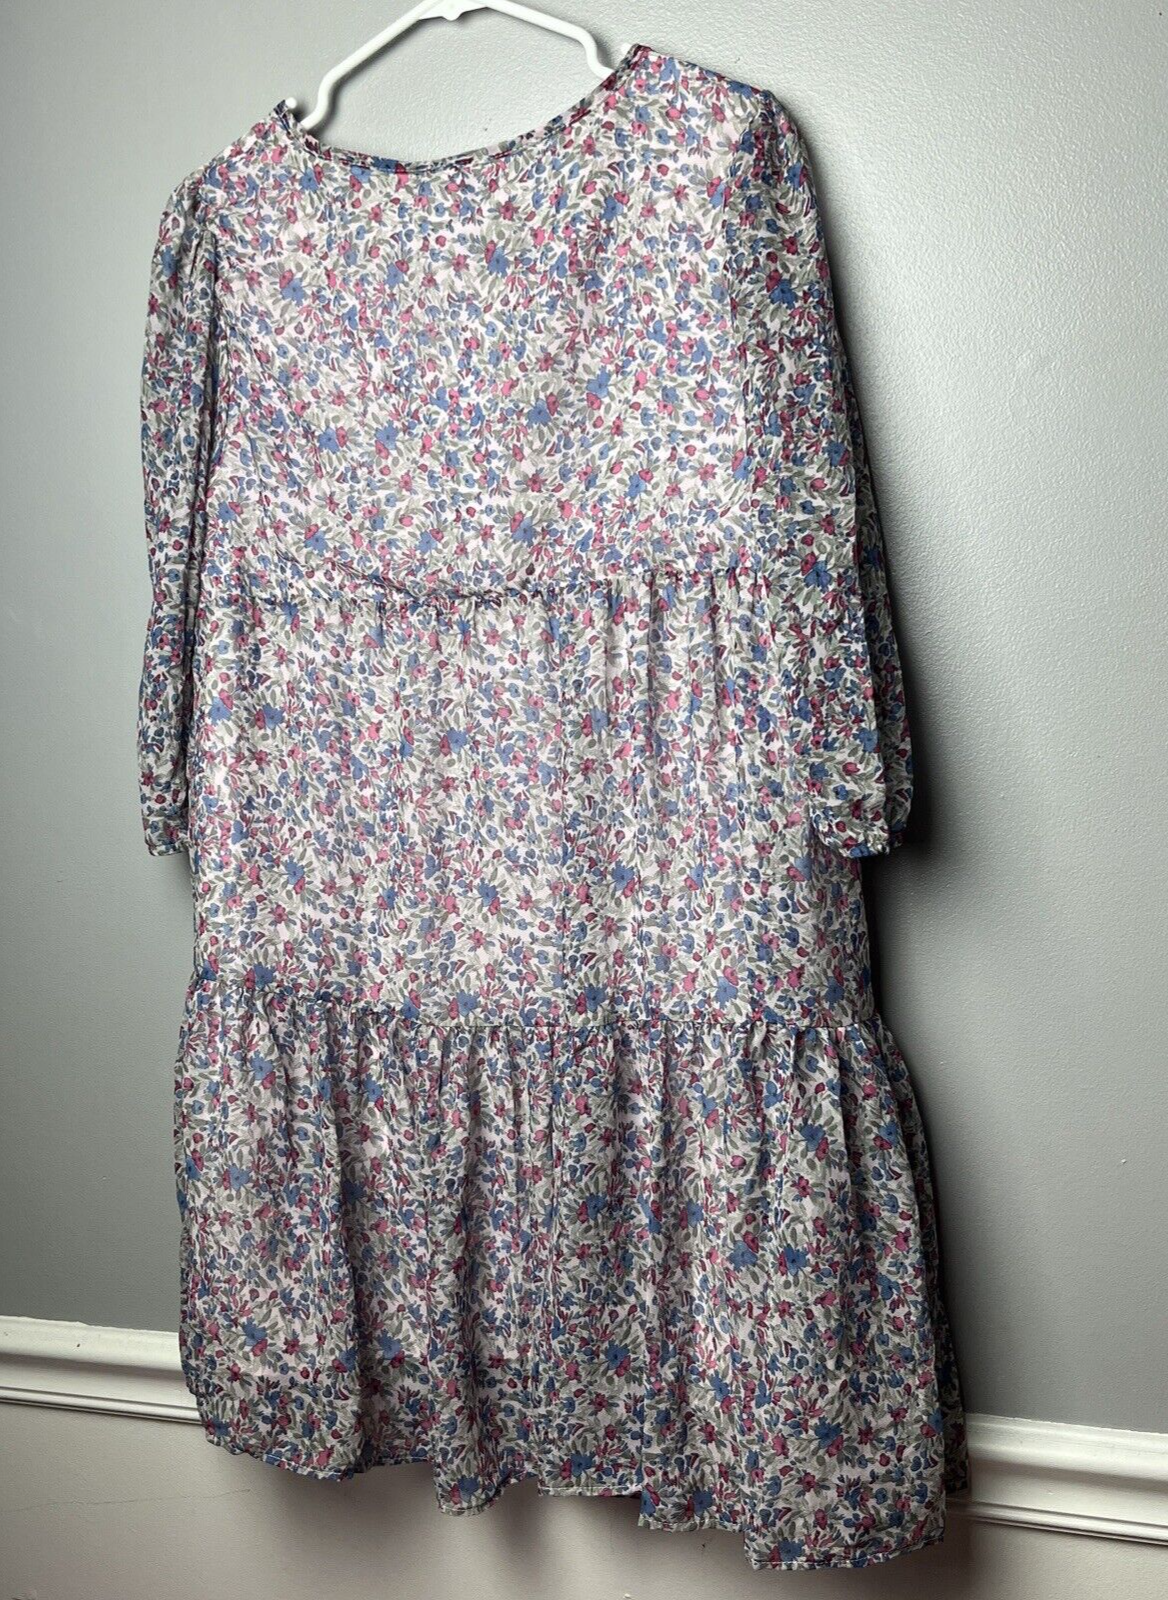 BB Dakota by Steve Madden Baby Love Me Mini Dress Blue Floral M NWT $89